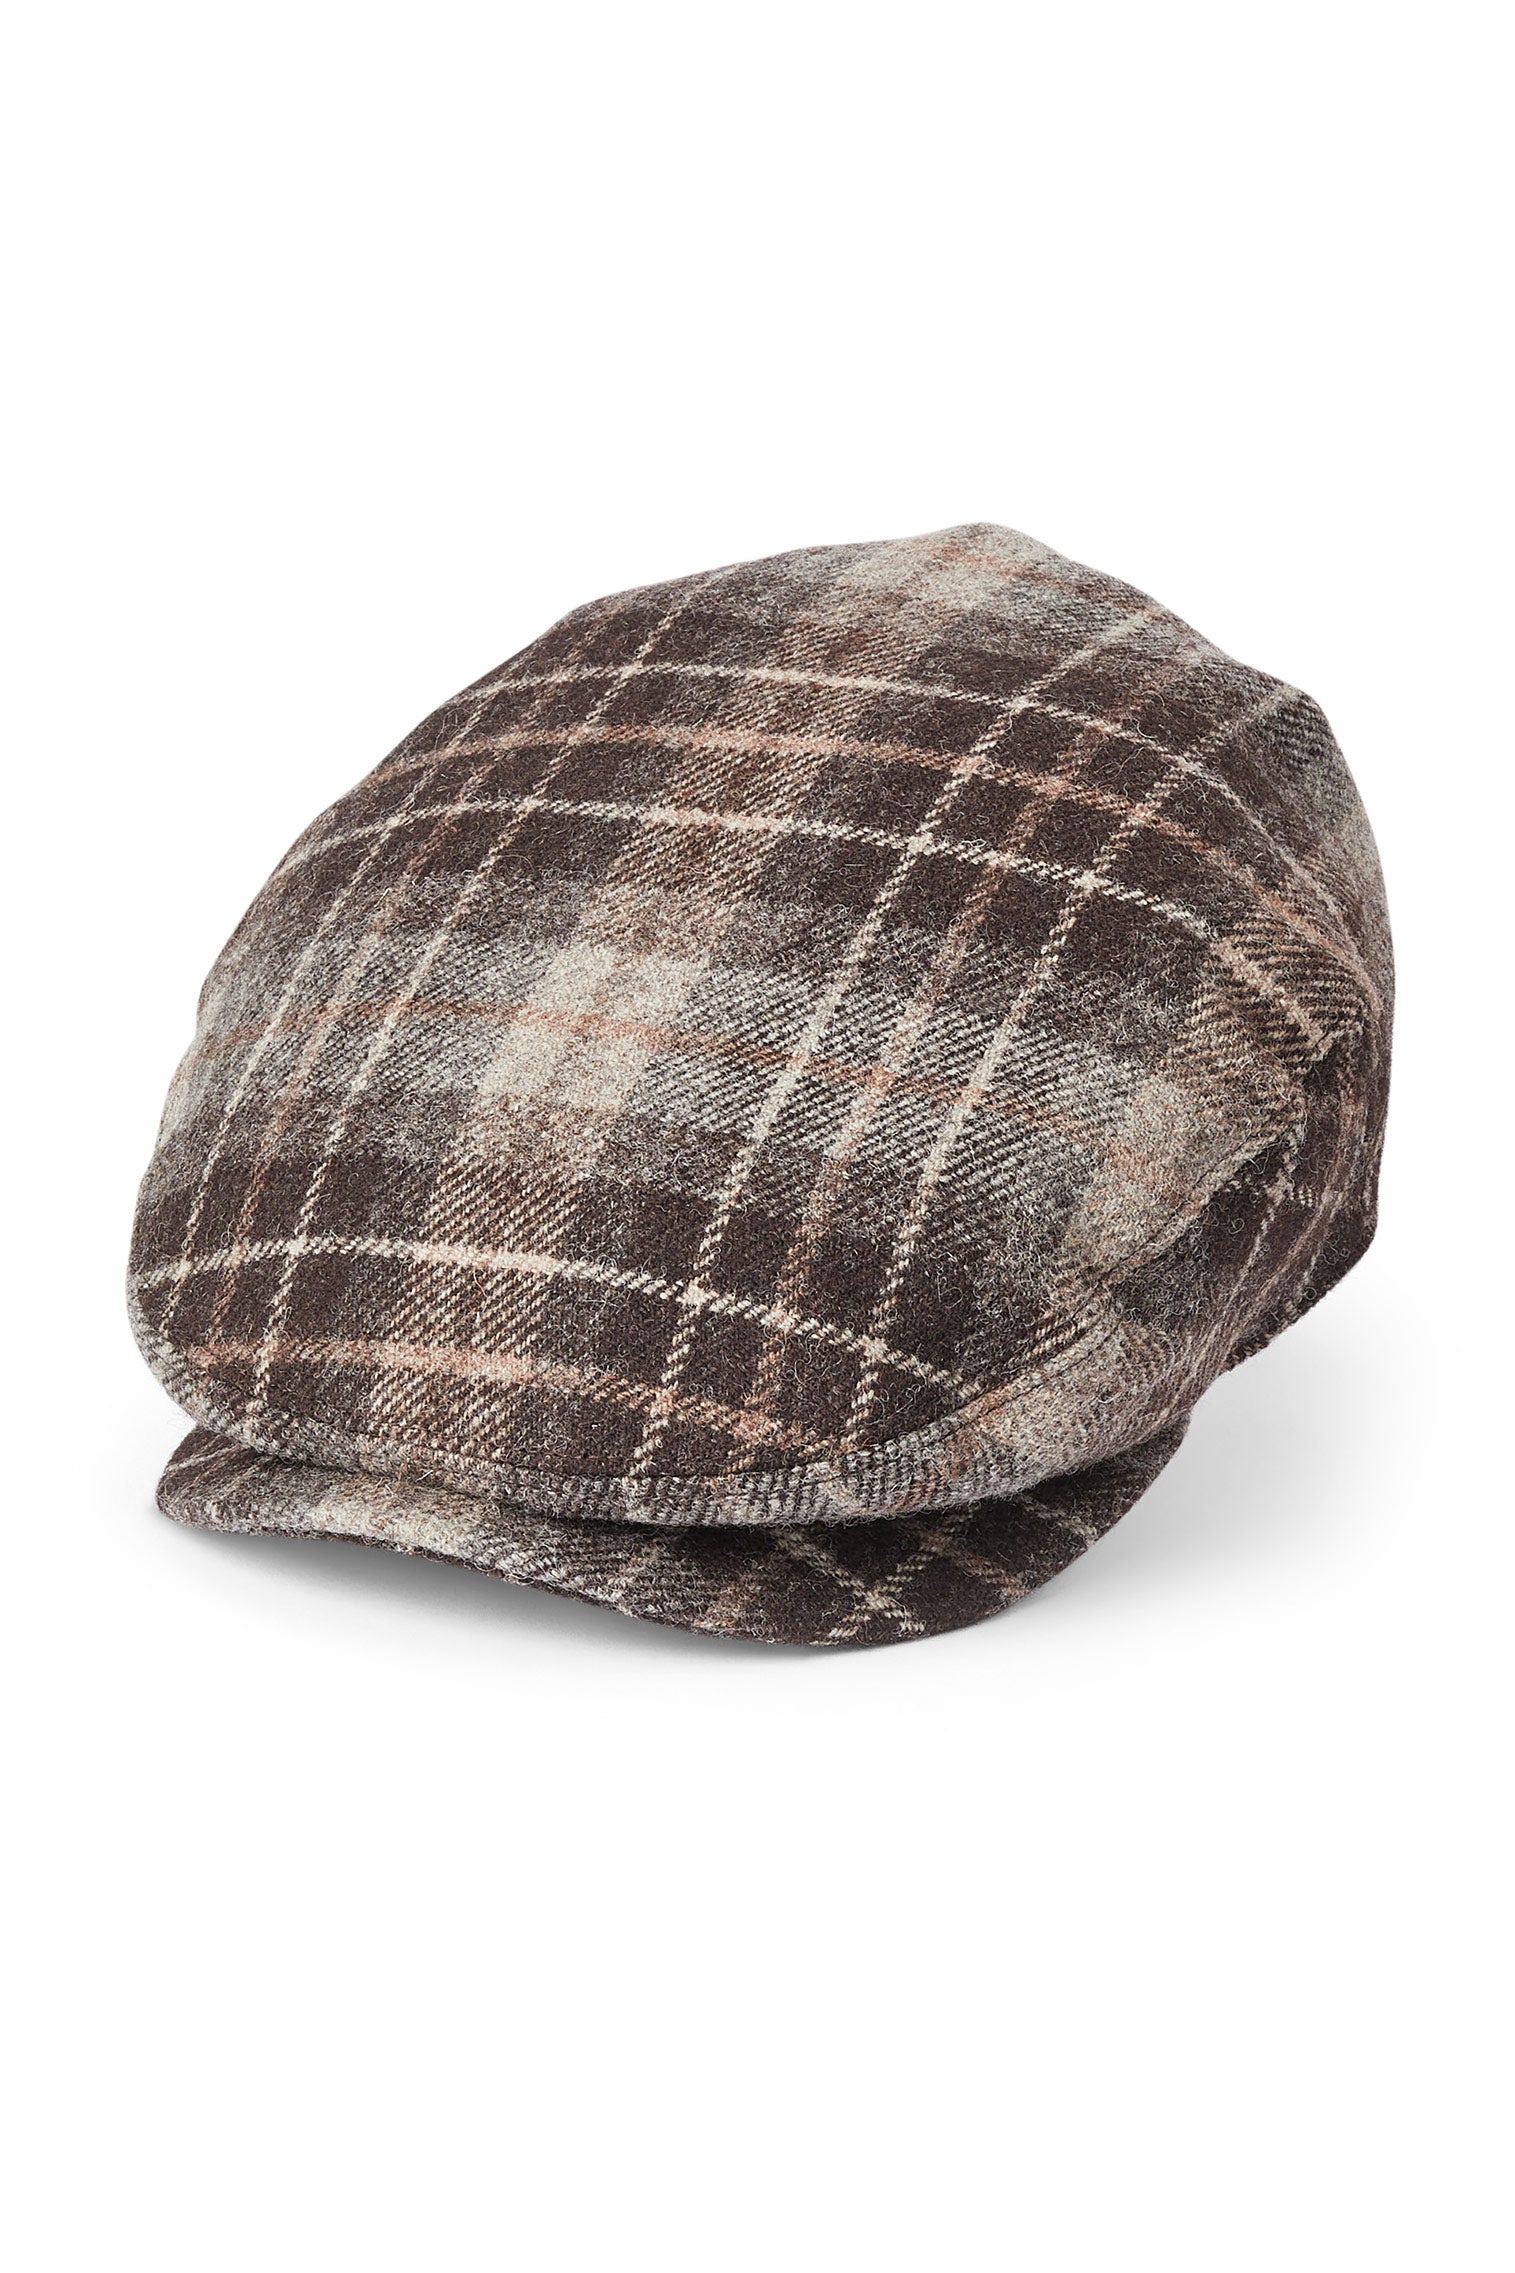 Turnberry Plaid Flat Cap - Men's Hats - Lock & Co. Hatters London UK